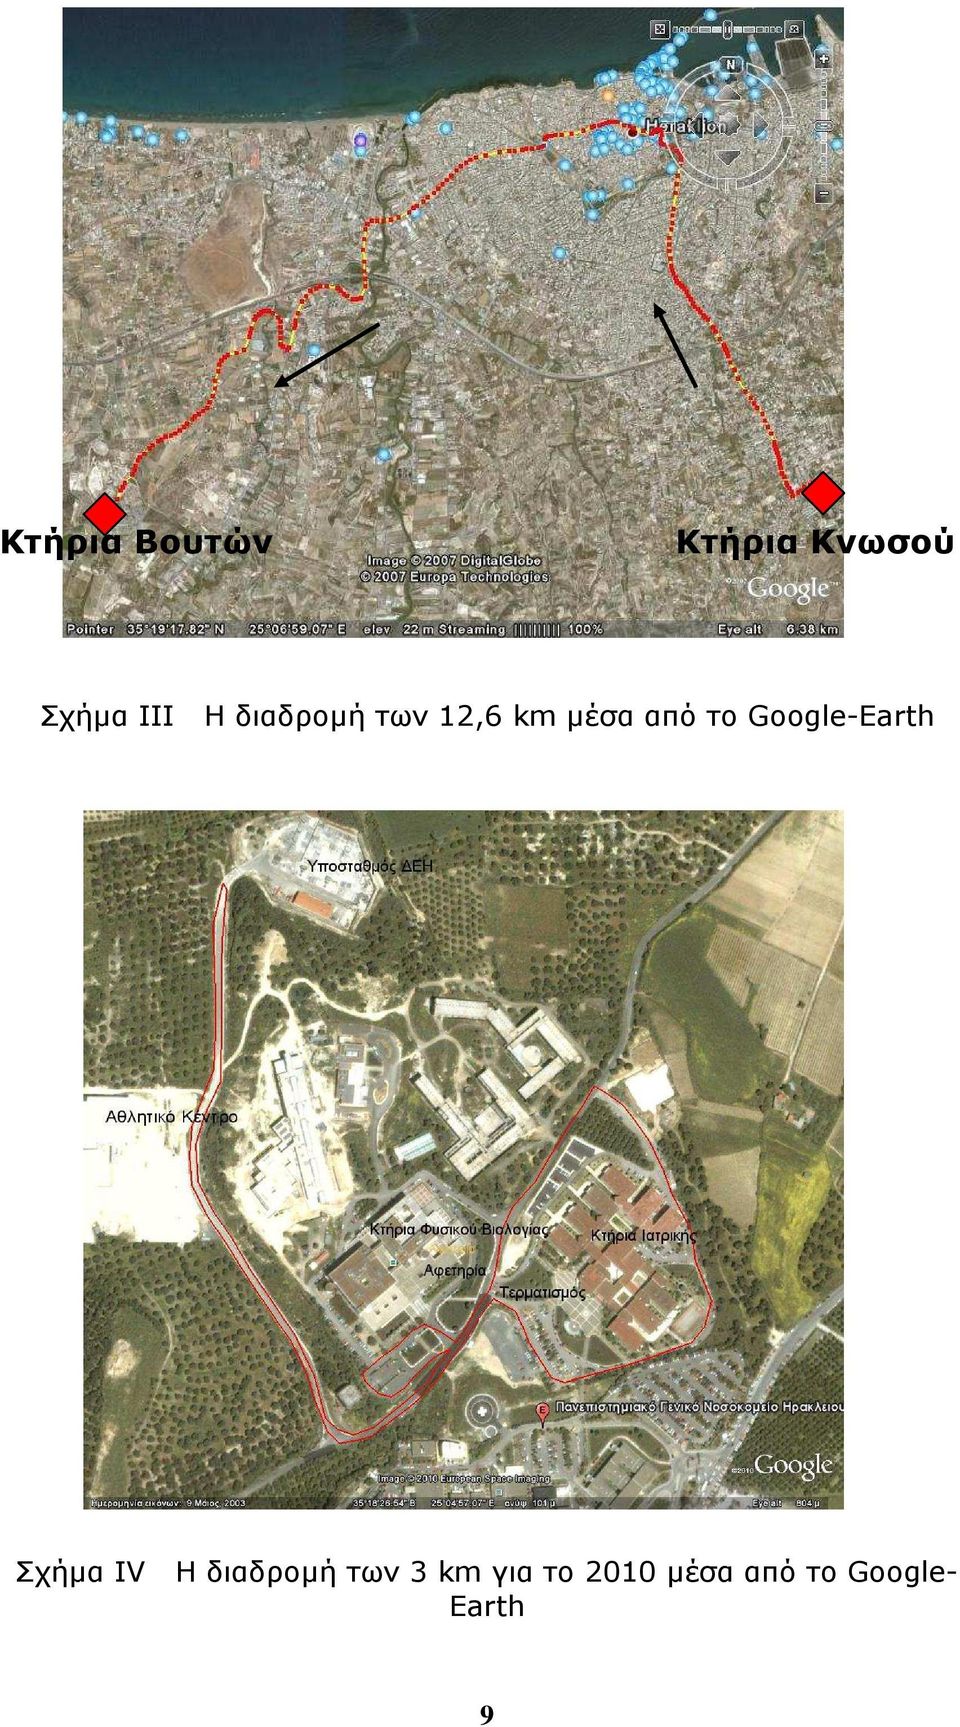 Google-Earth Σχήµα ΙV Η διαδροµή των 3